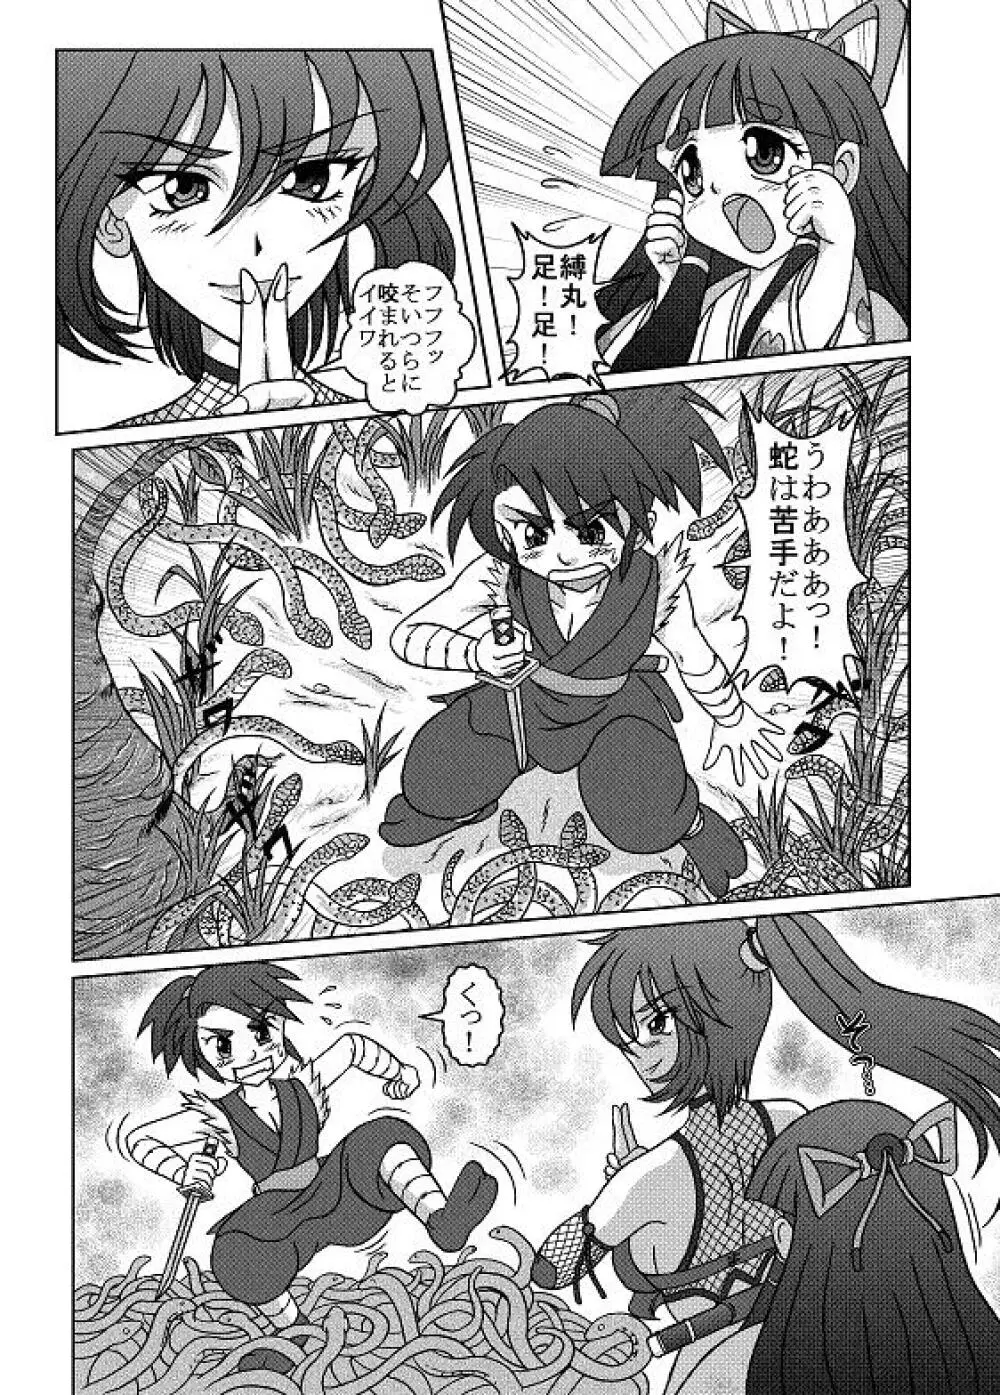 Same-themed manga about kid fighting female ninjas from japanese imageboard. 40ページ